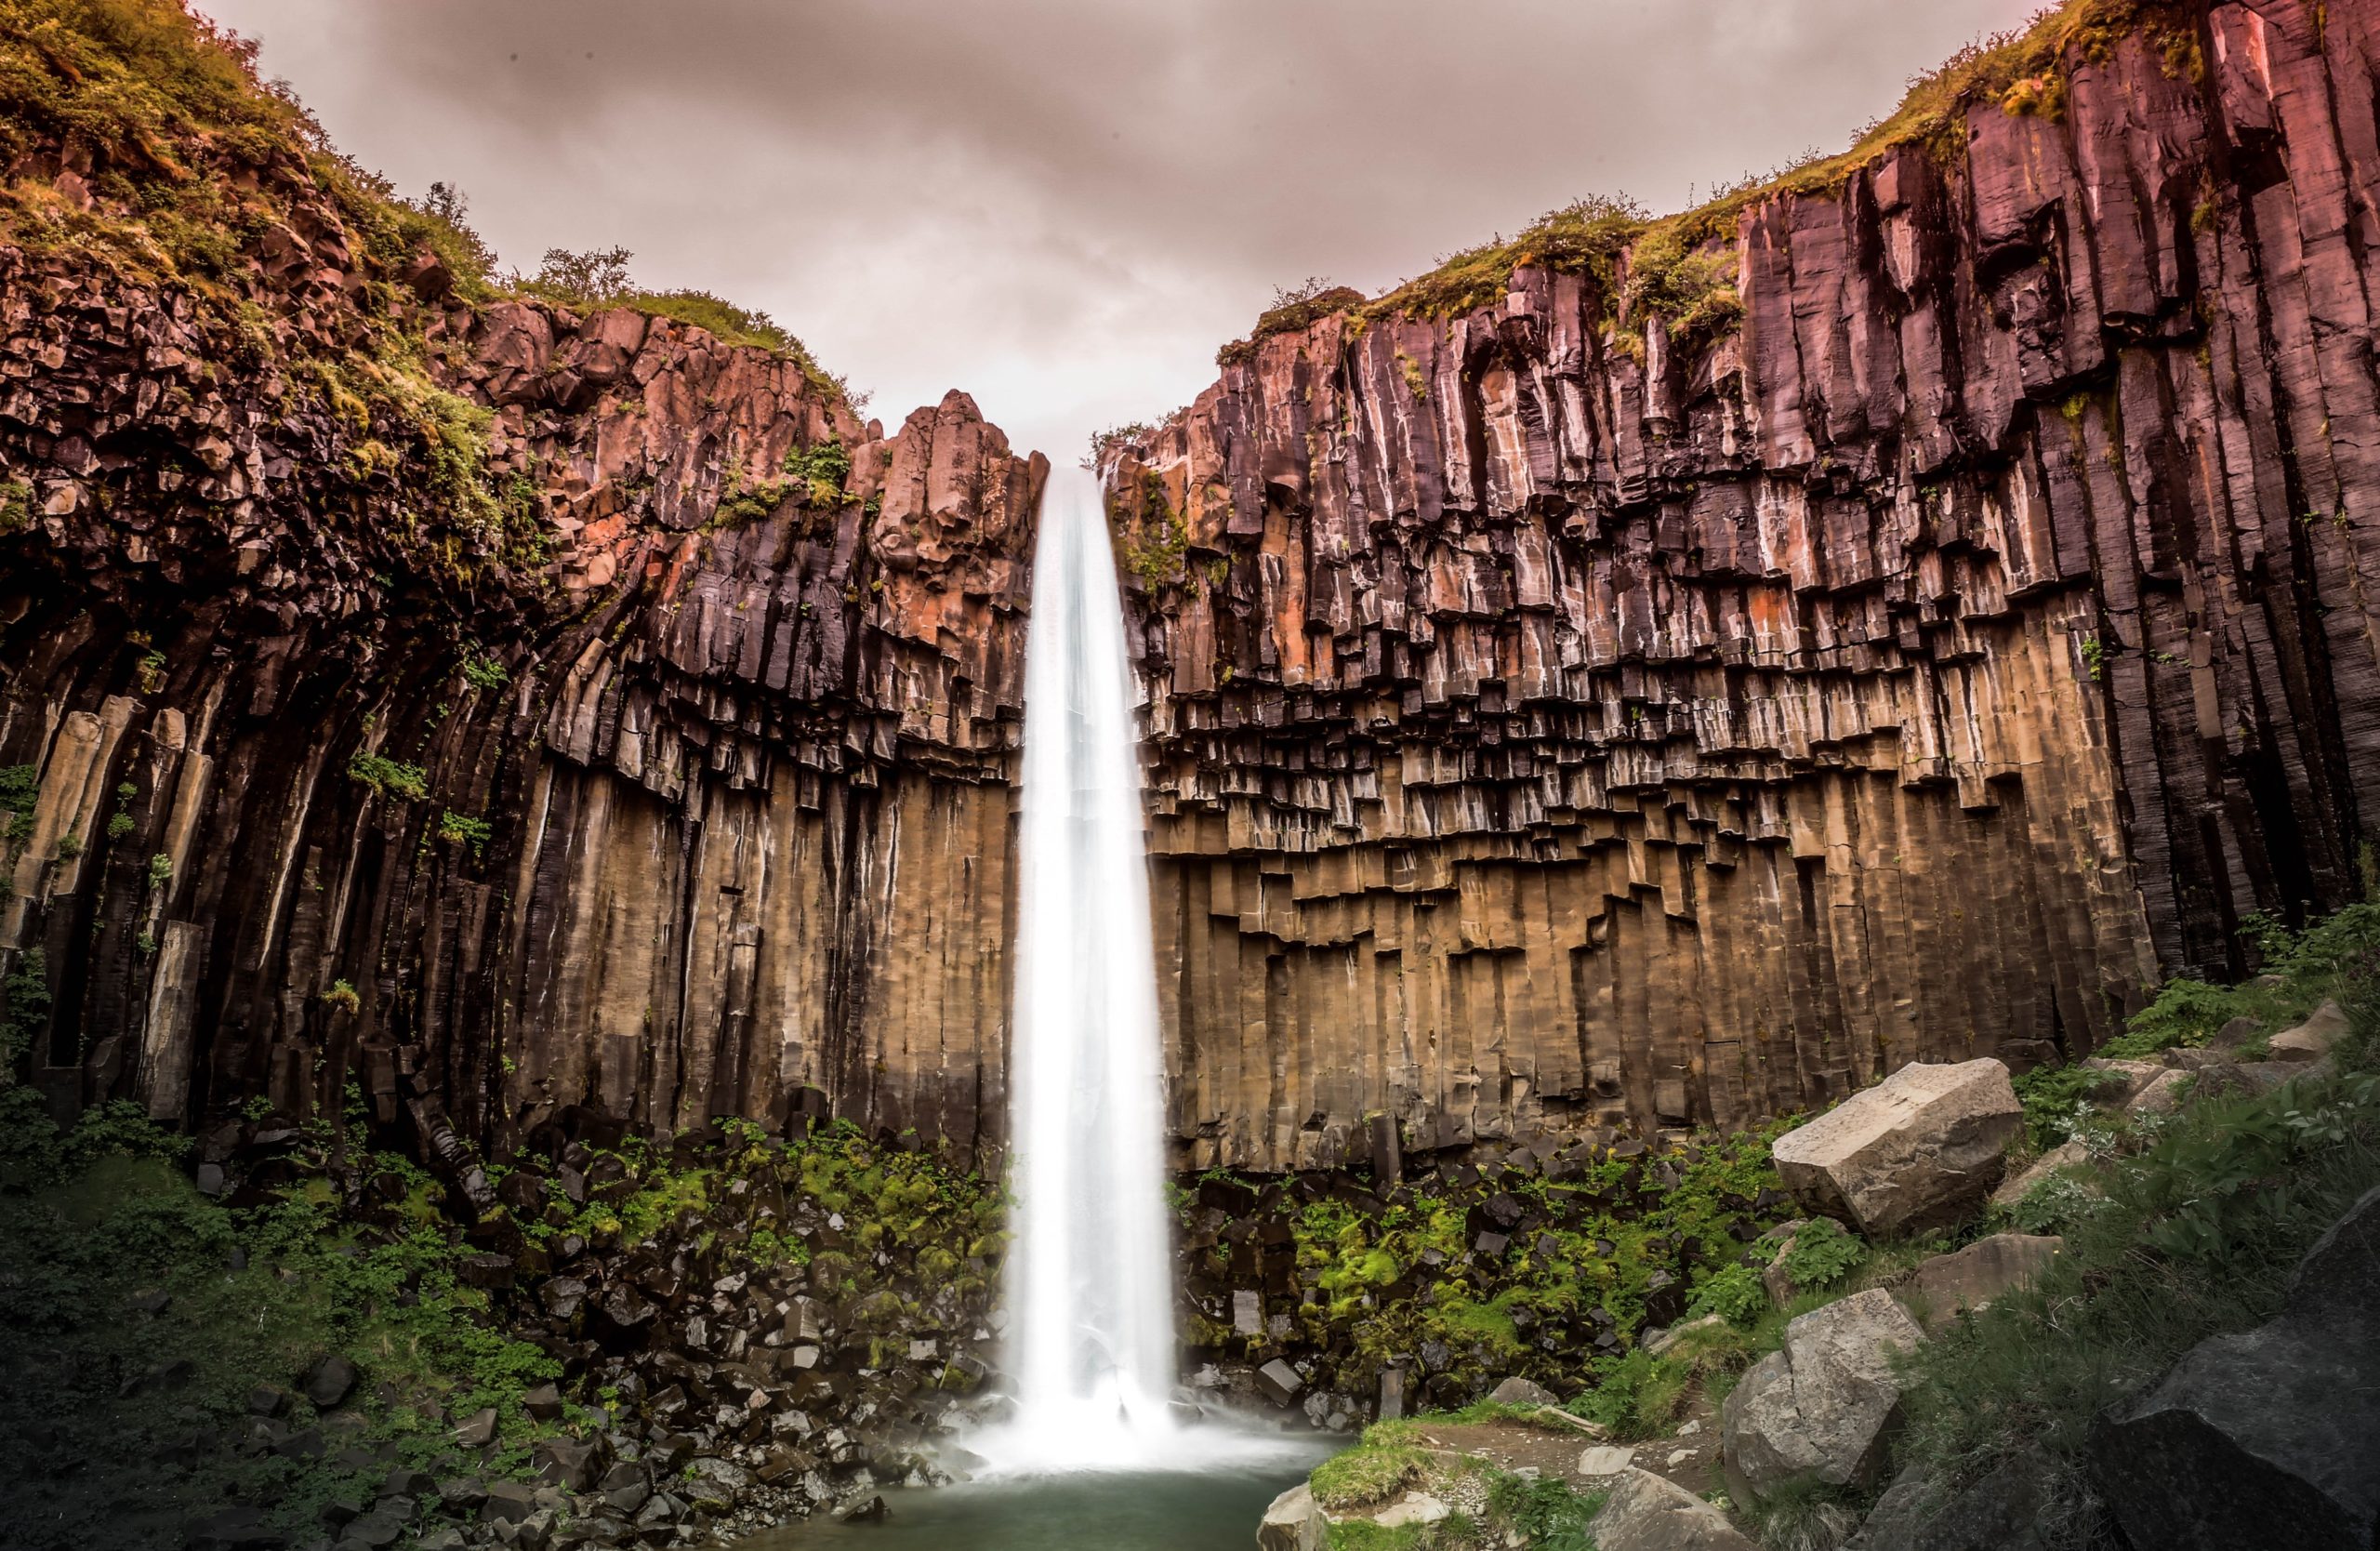 Svatifoss waterfall in Iceland